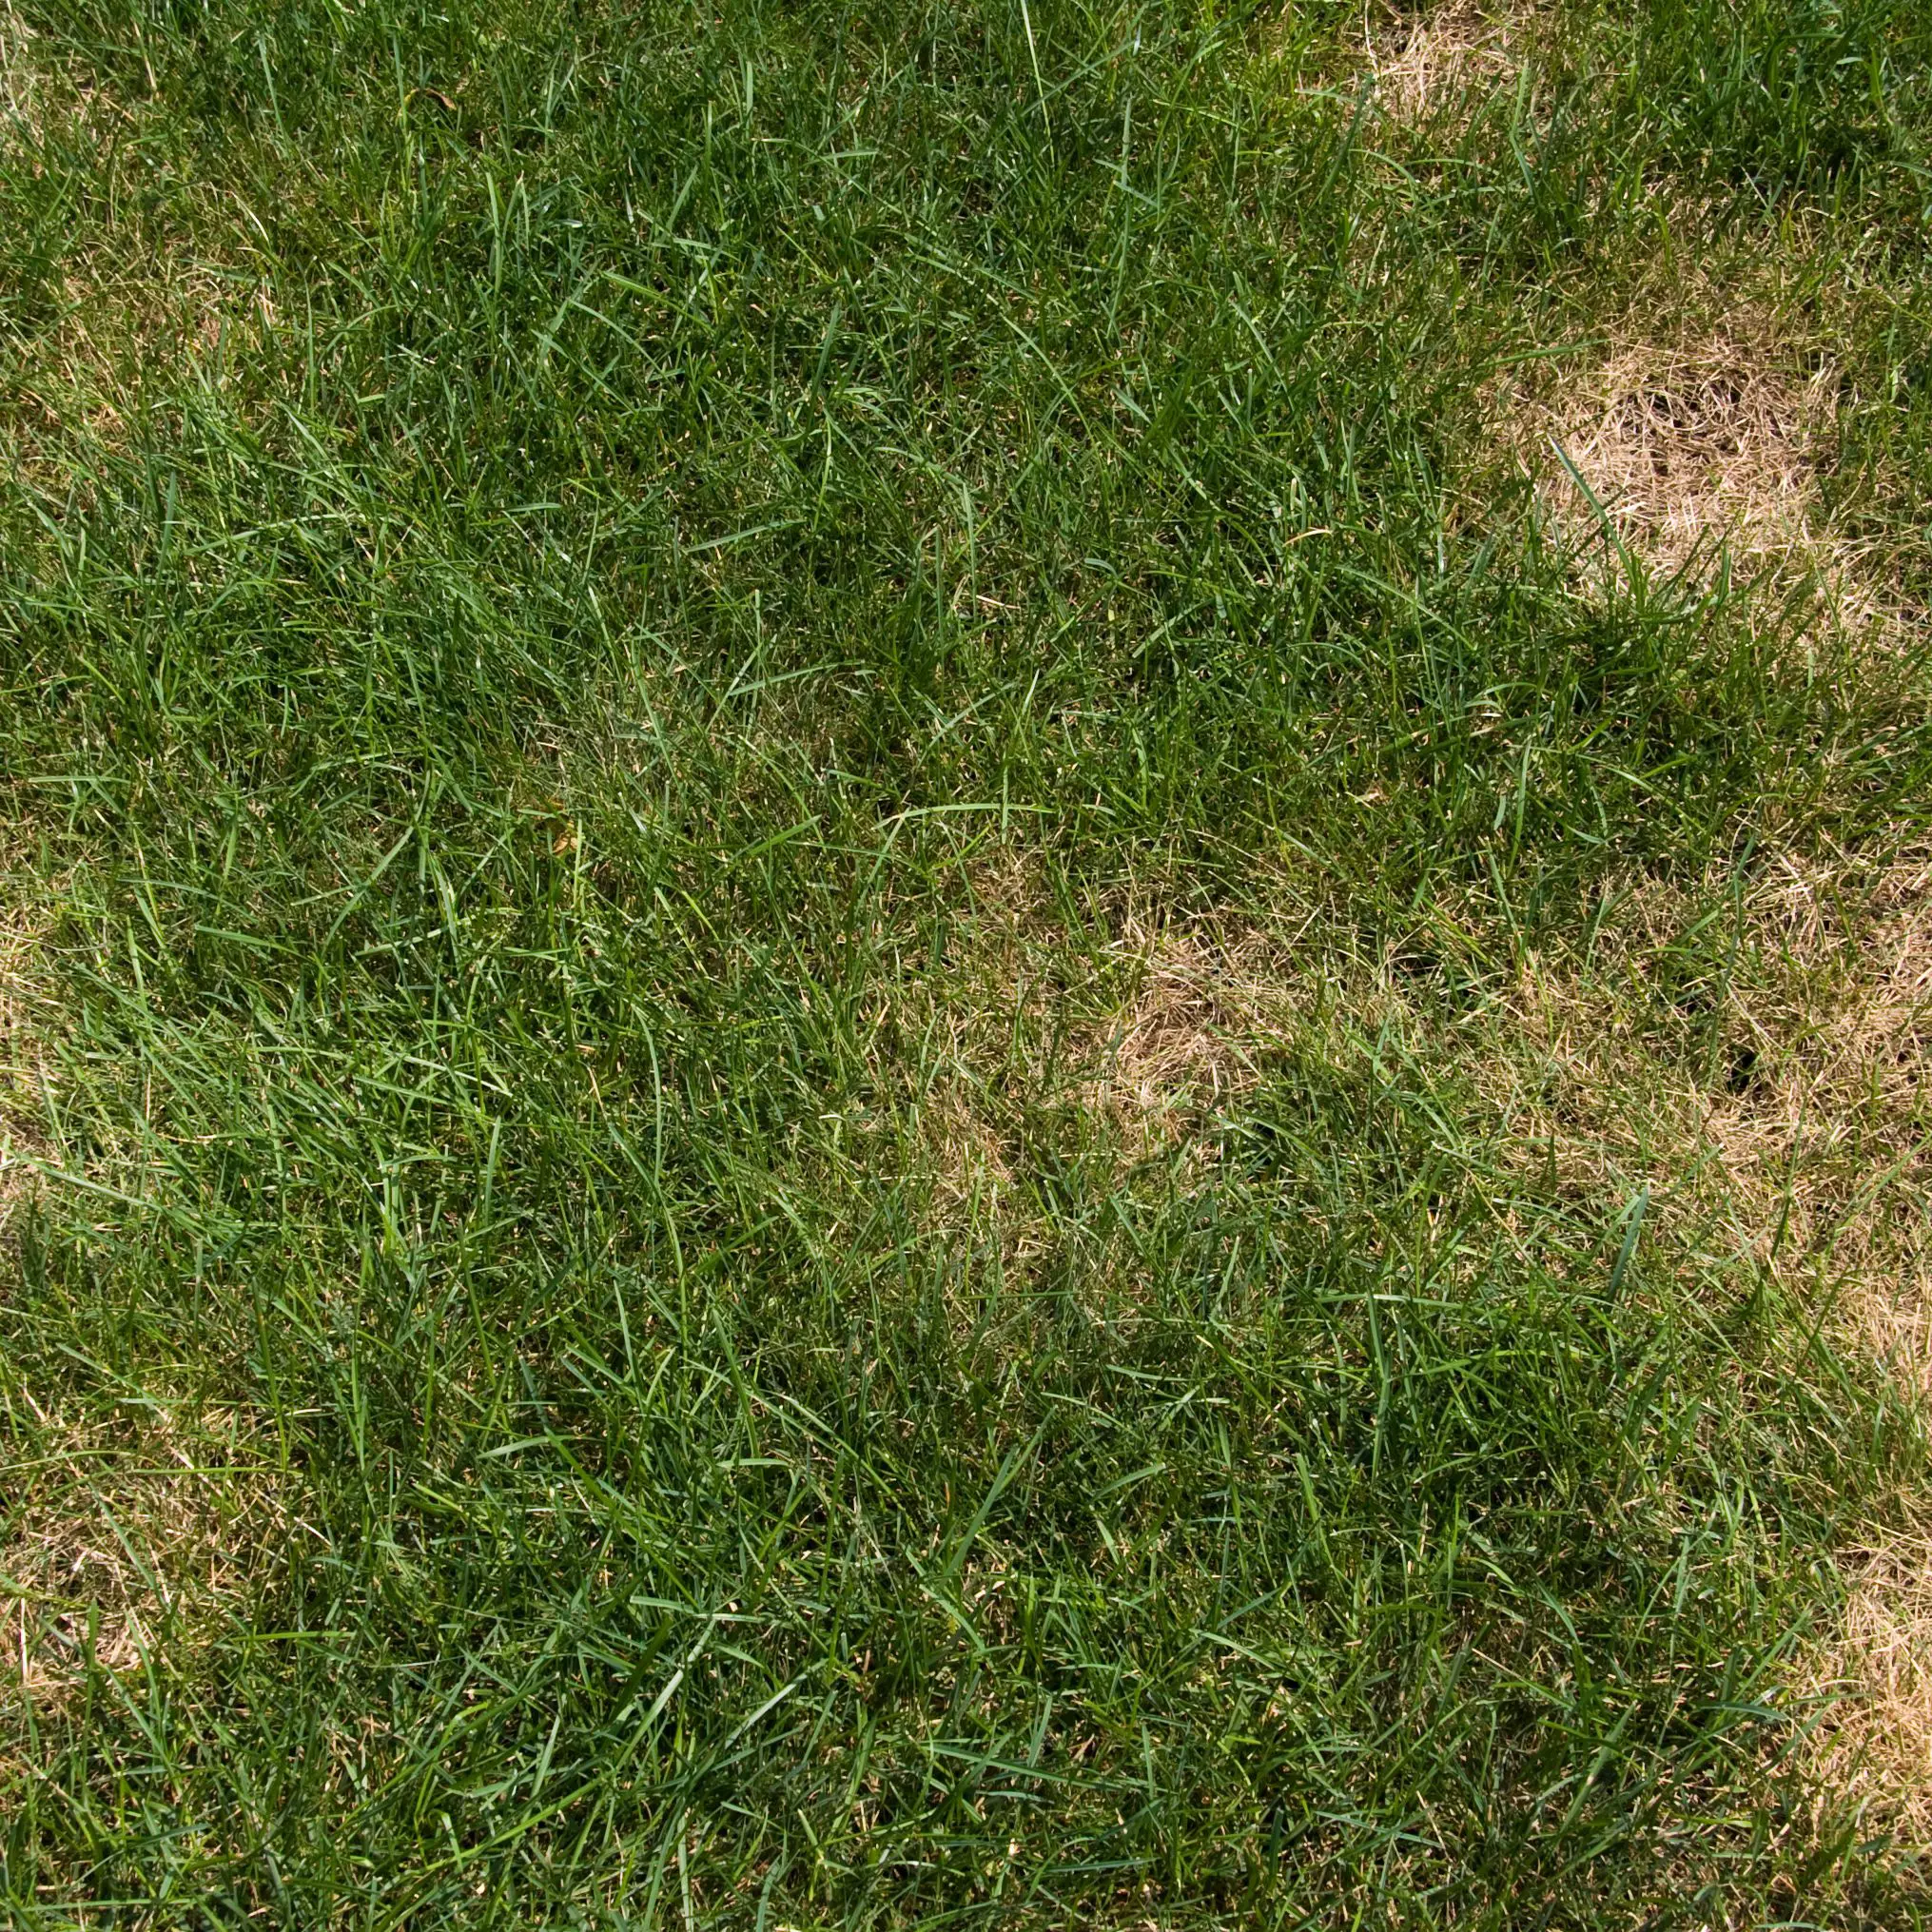 Over Fertilization Lawn Symptoms